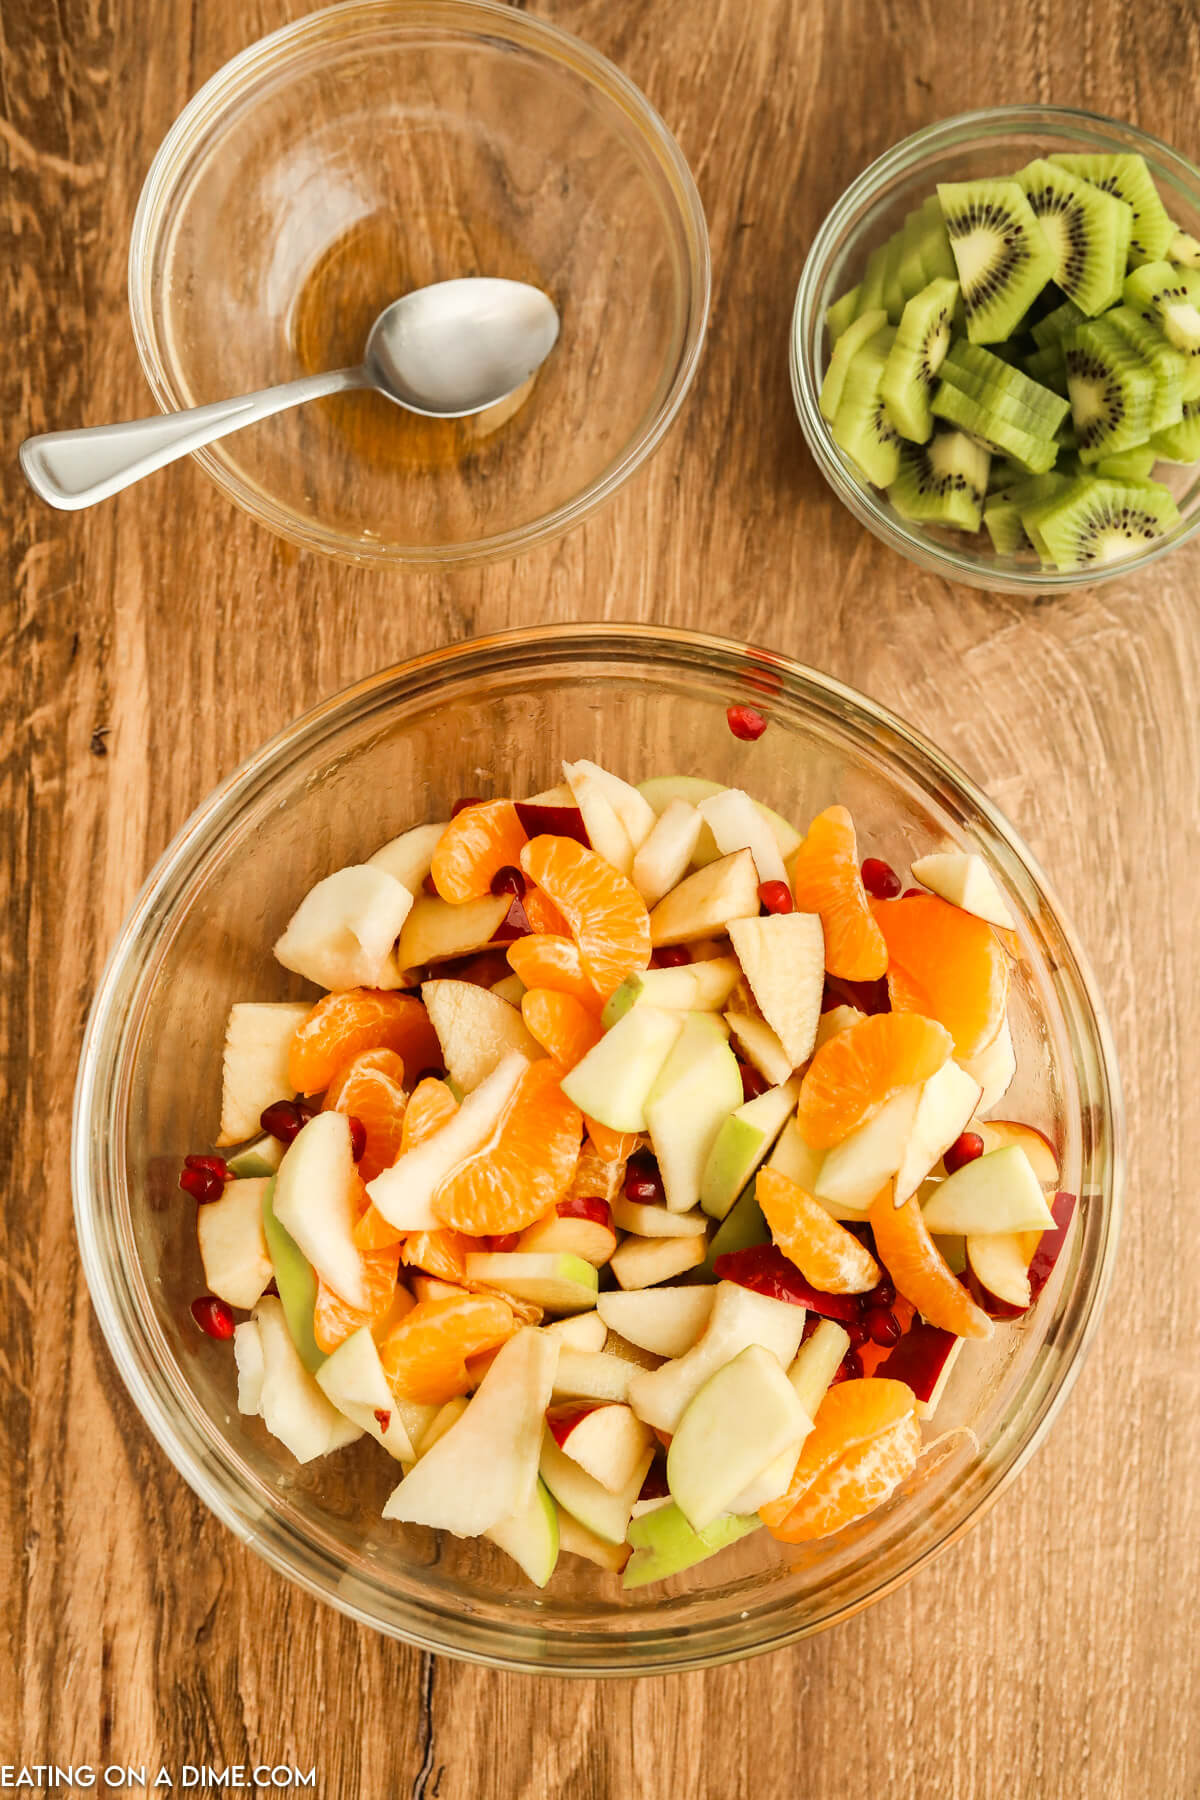 Bowl of cut up fruit. 